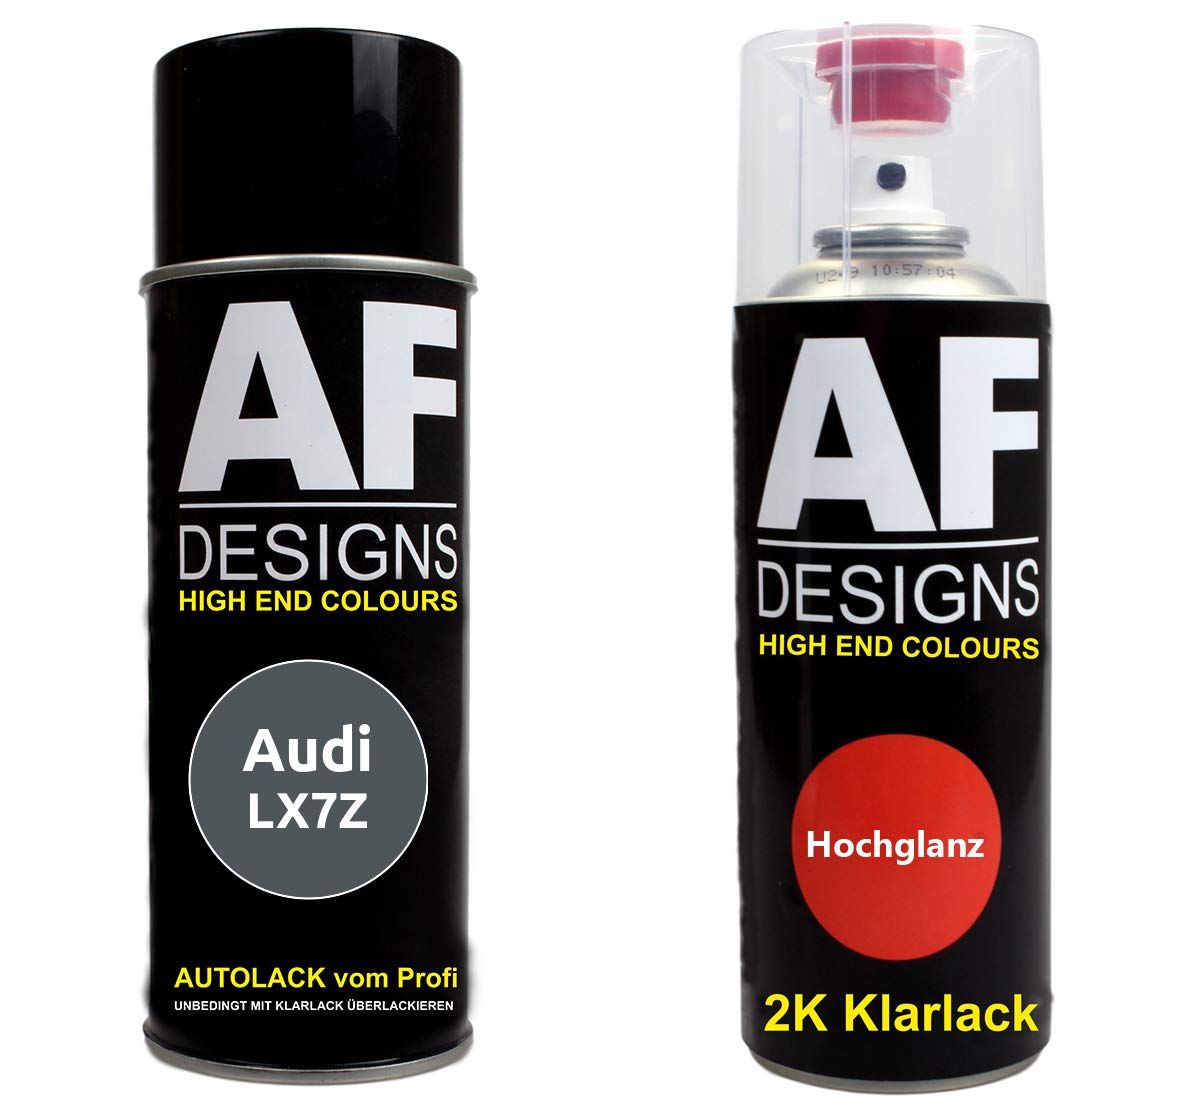 Autolack Spraydose Set für Audi LX7Z Delfingrau Metallic 2K Klarlack Basislack Sprühdose Spraydosen 2x400ml von Alex Flittner Designs